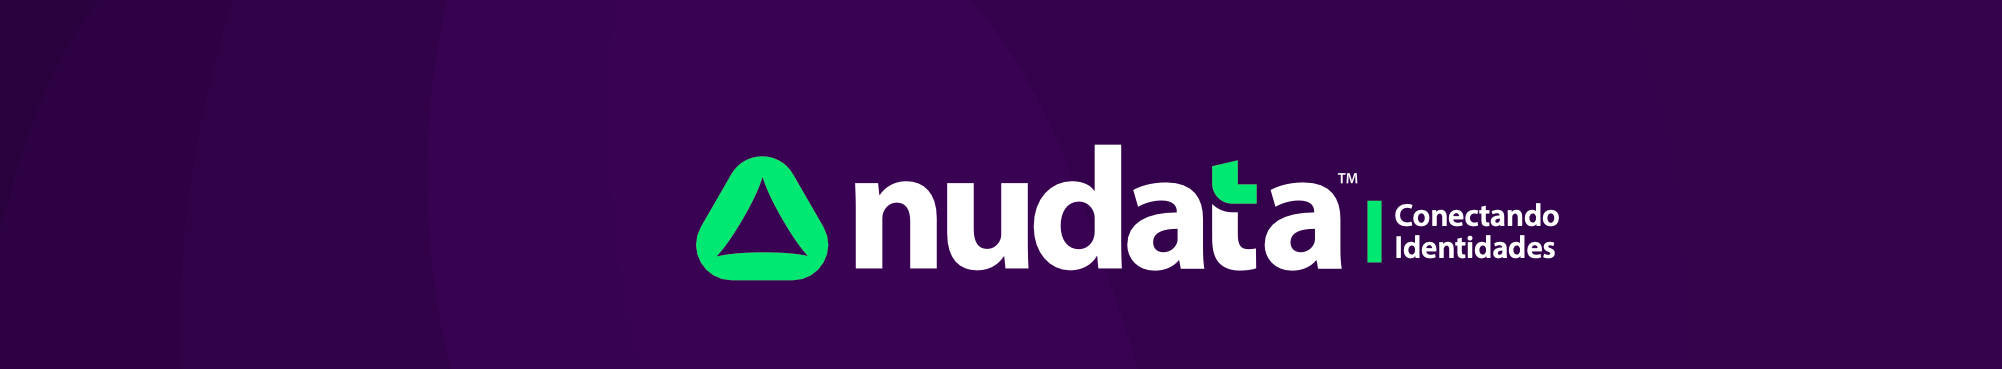 Nudata Digital's profile banner